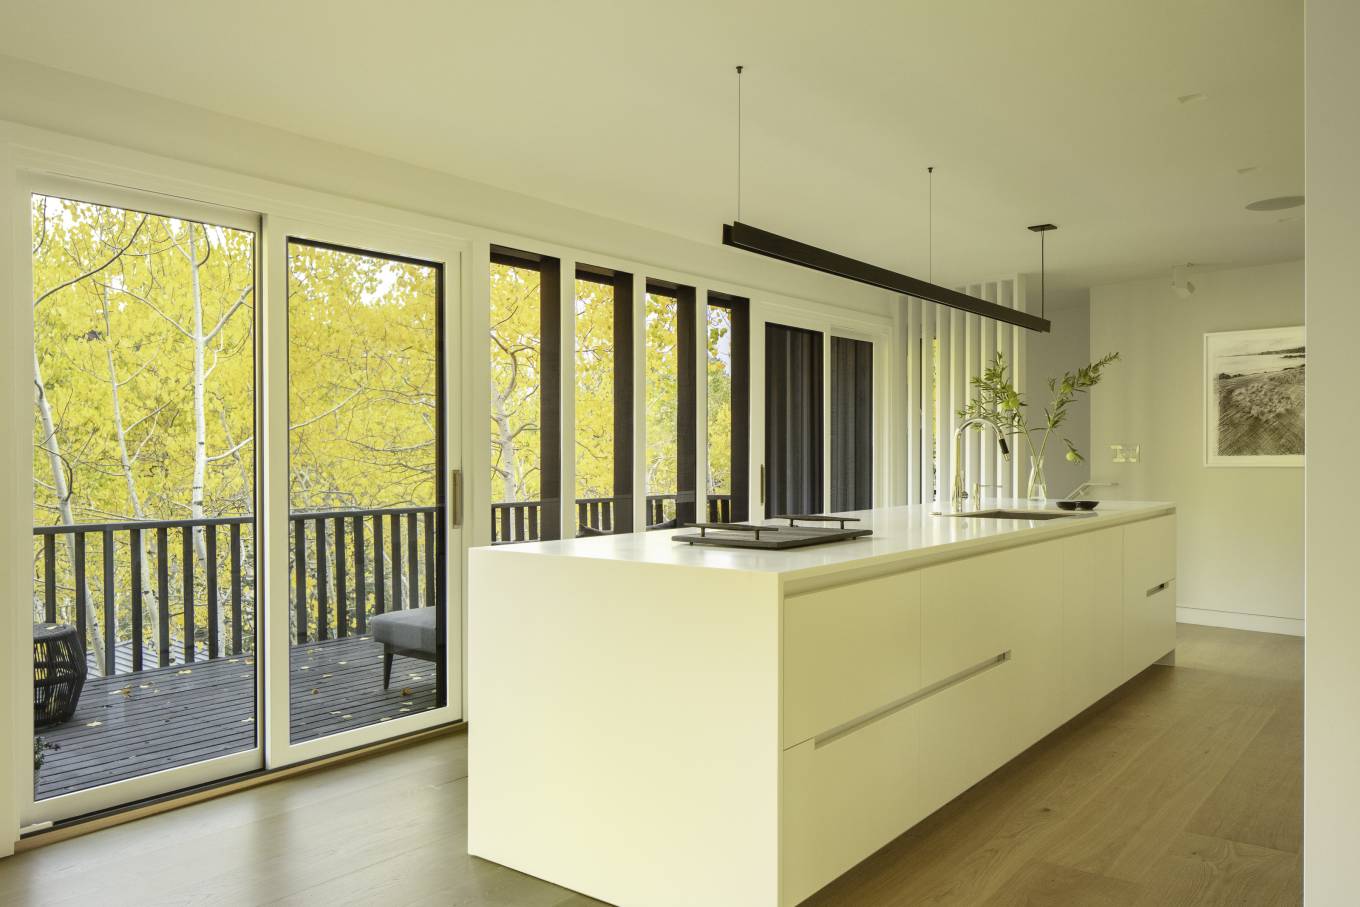 This project features a Vesel Brand designed kitchen, Dinesen wide-plank flooring from Denmark, Miele appliances, Dornbracht plumbing fixtures.